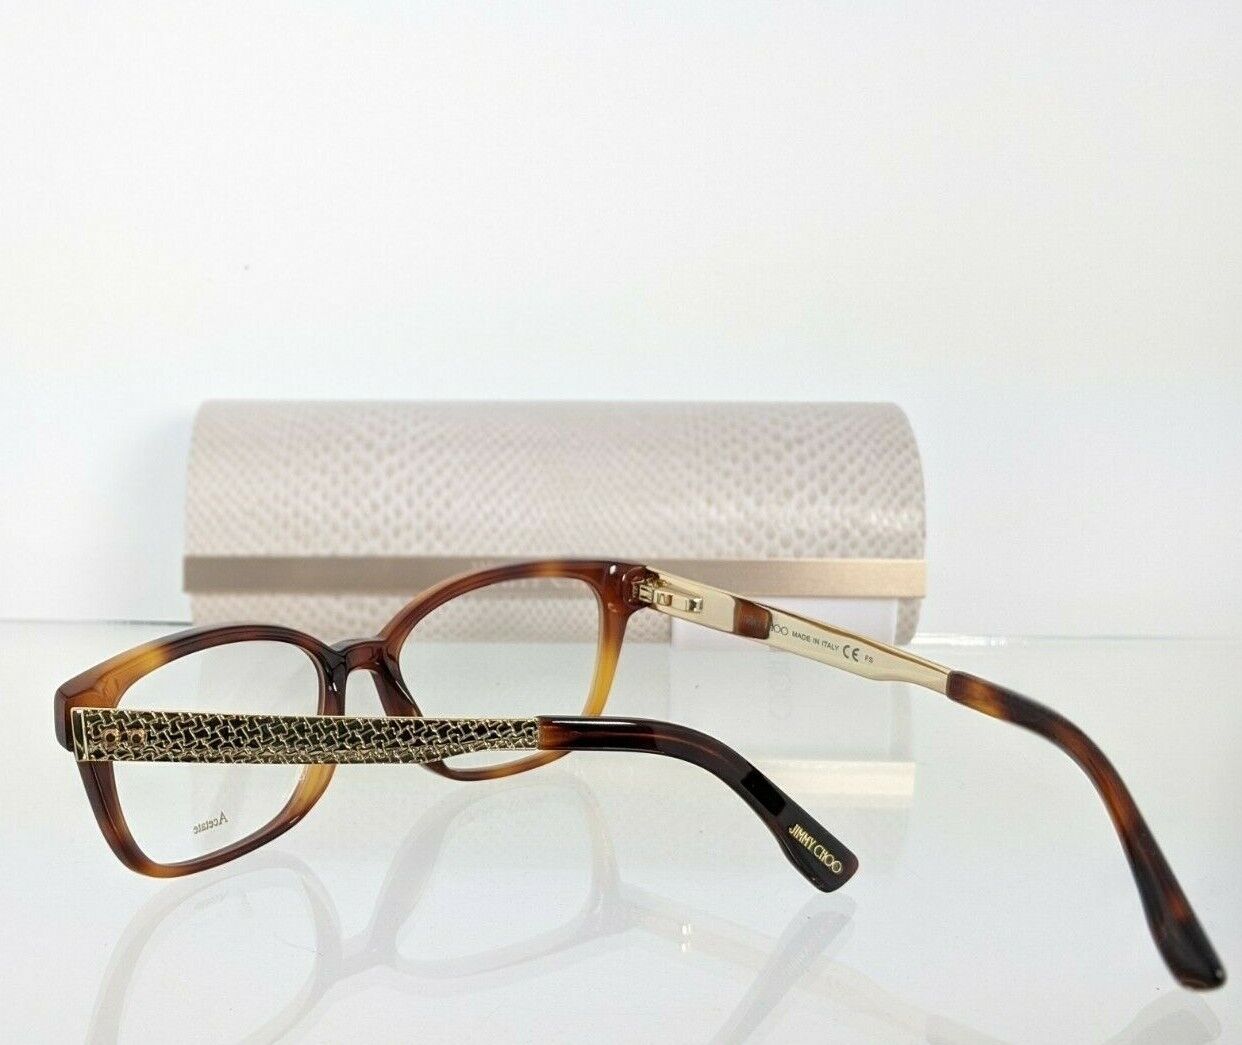 Brand New Authentic Jimmy Choo Eyeglasses 160 BHZ Tortoise Gold Frame